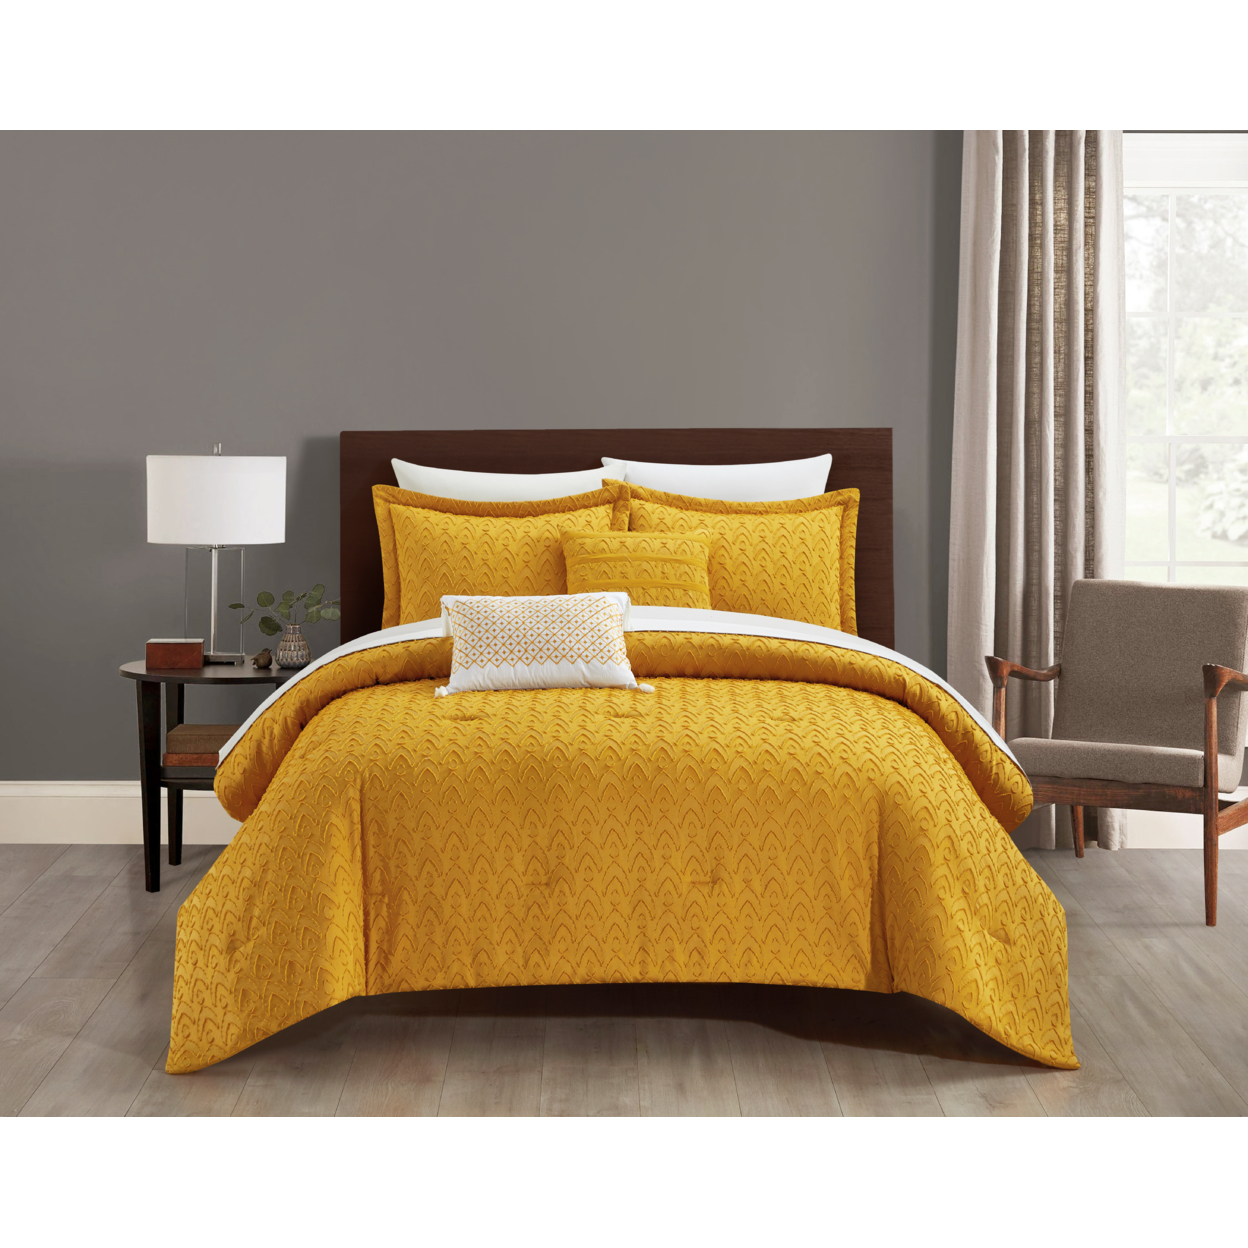 Deign 5 Piece Comforter Set Clip Jacquard Geometric Pattern Design Bedding - Beige, King